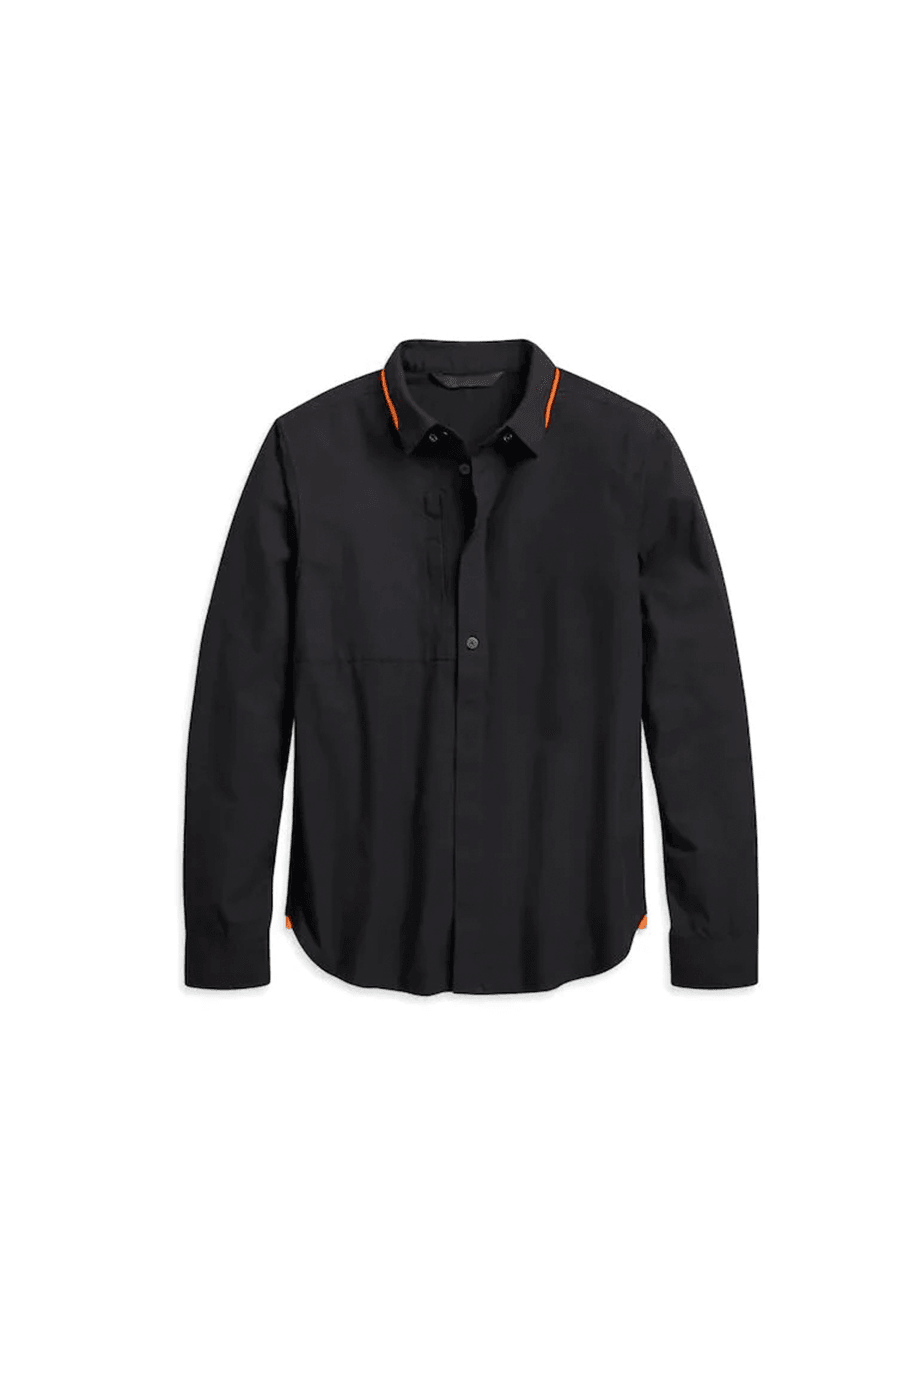 Harley-Davidson® Shirt-Woven, Black